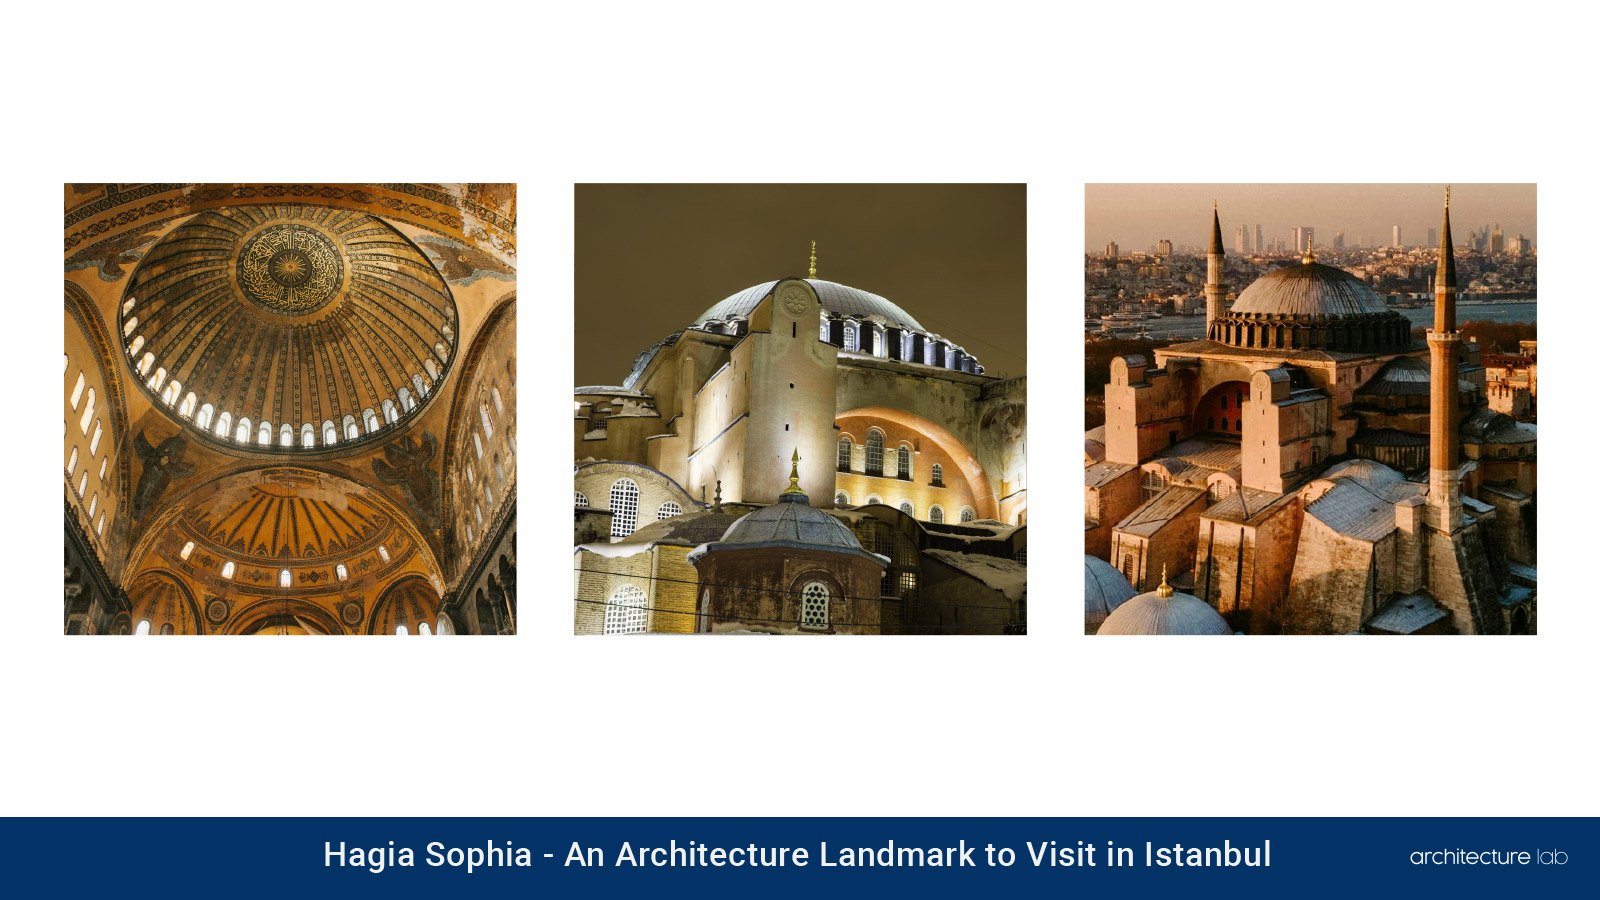 Hagia sophia: an architecture landmark to visit in istanbul